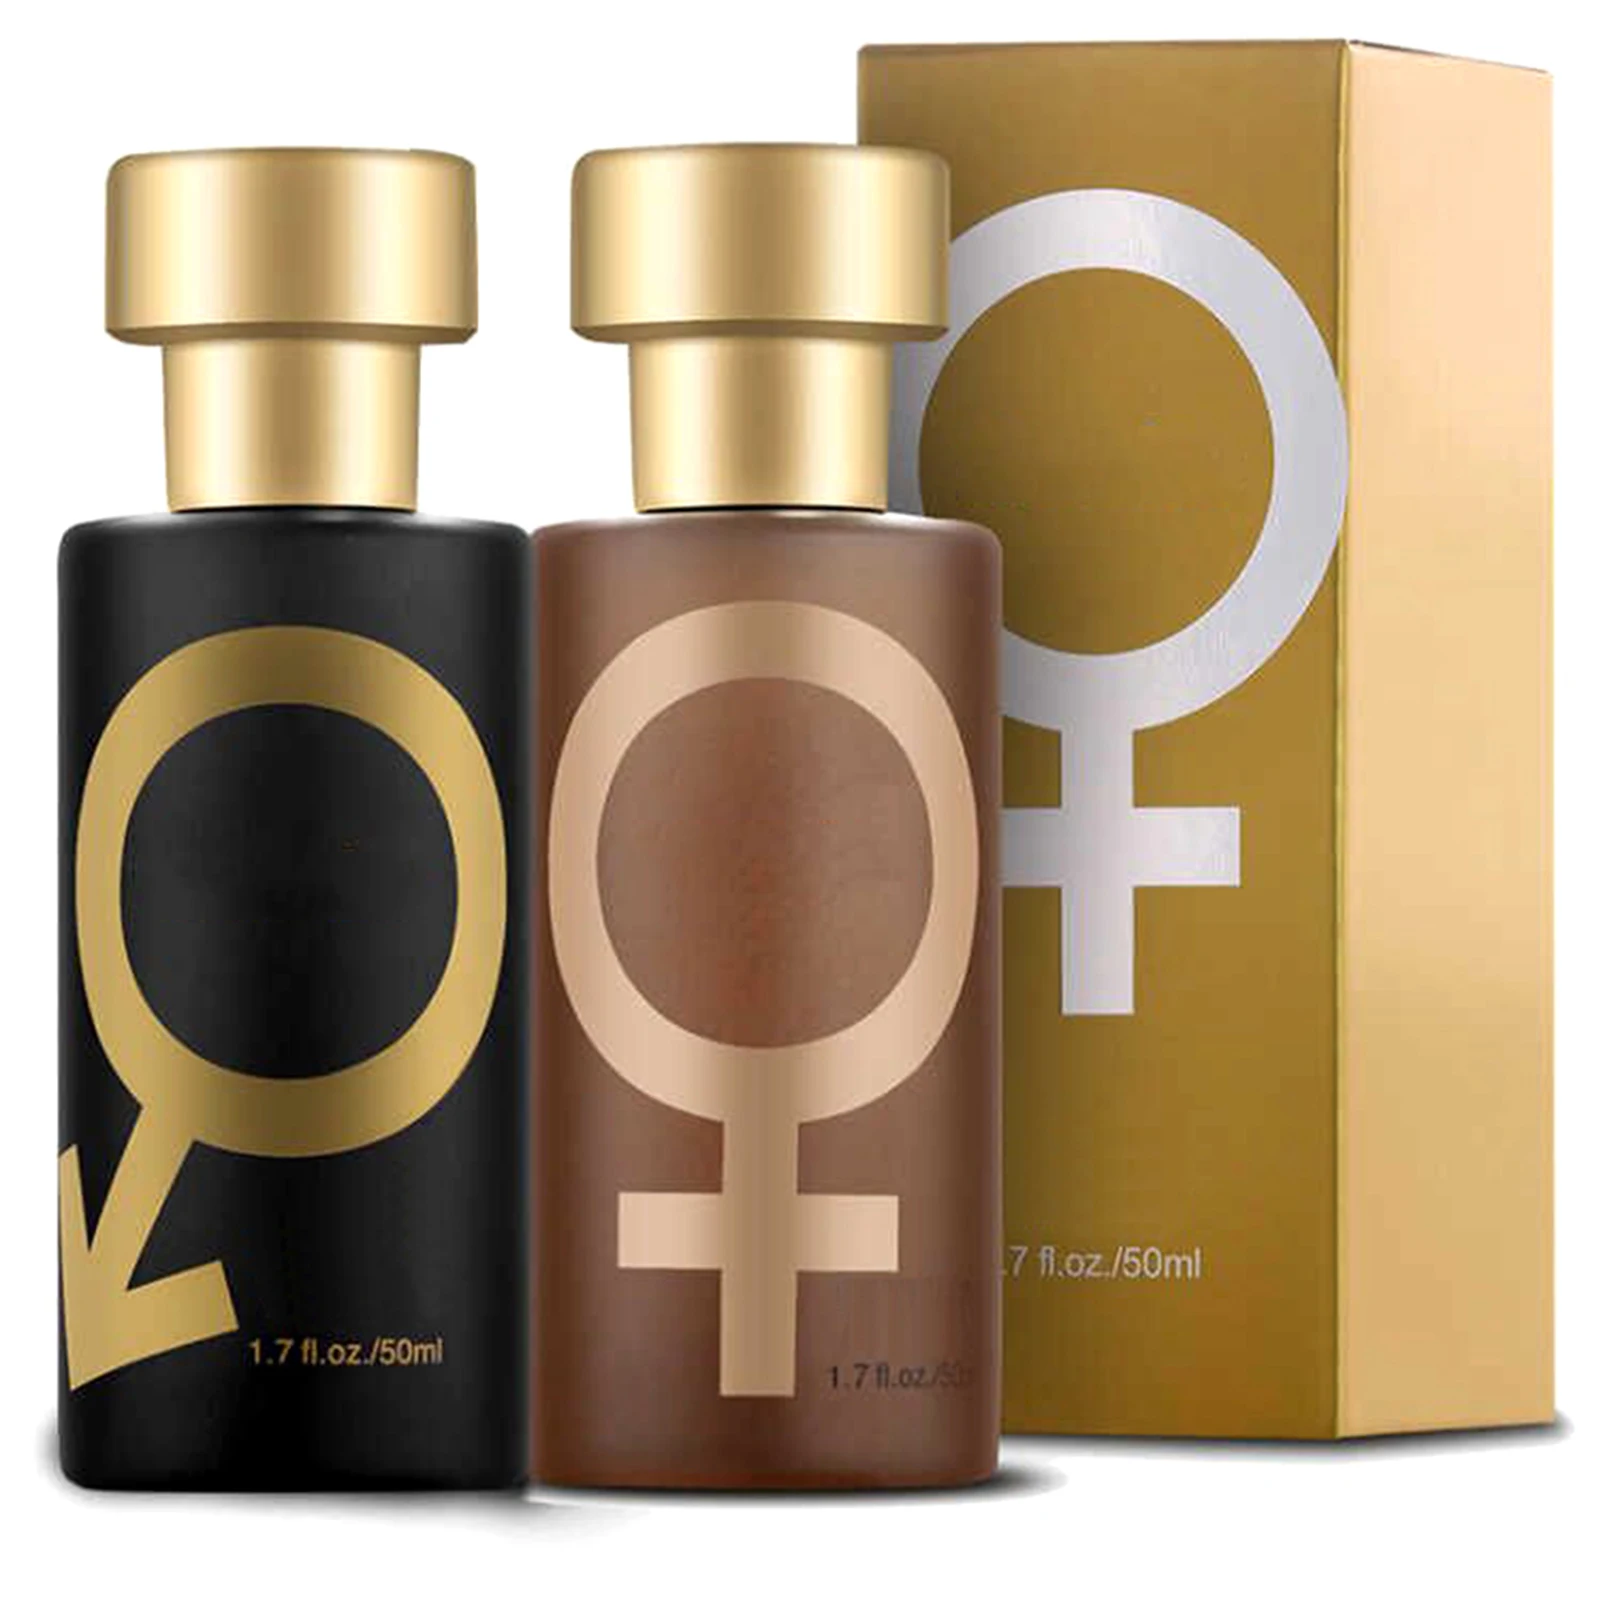 New Arrival 50ml Lure Pheromone Body Spray Perfume Lasting Scents Lure ...